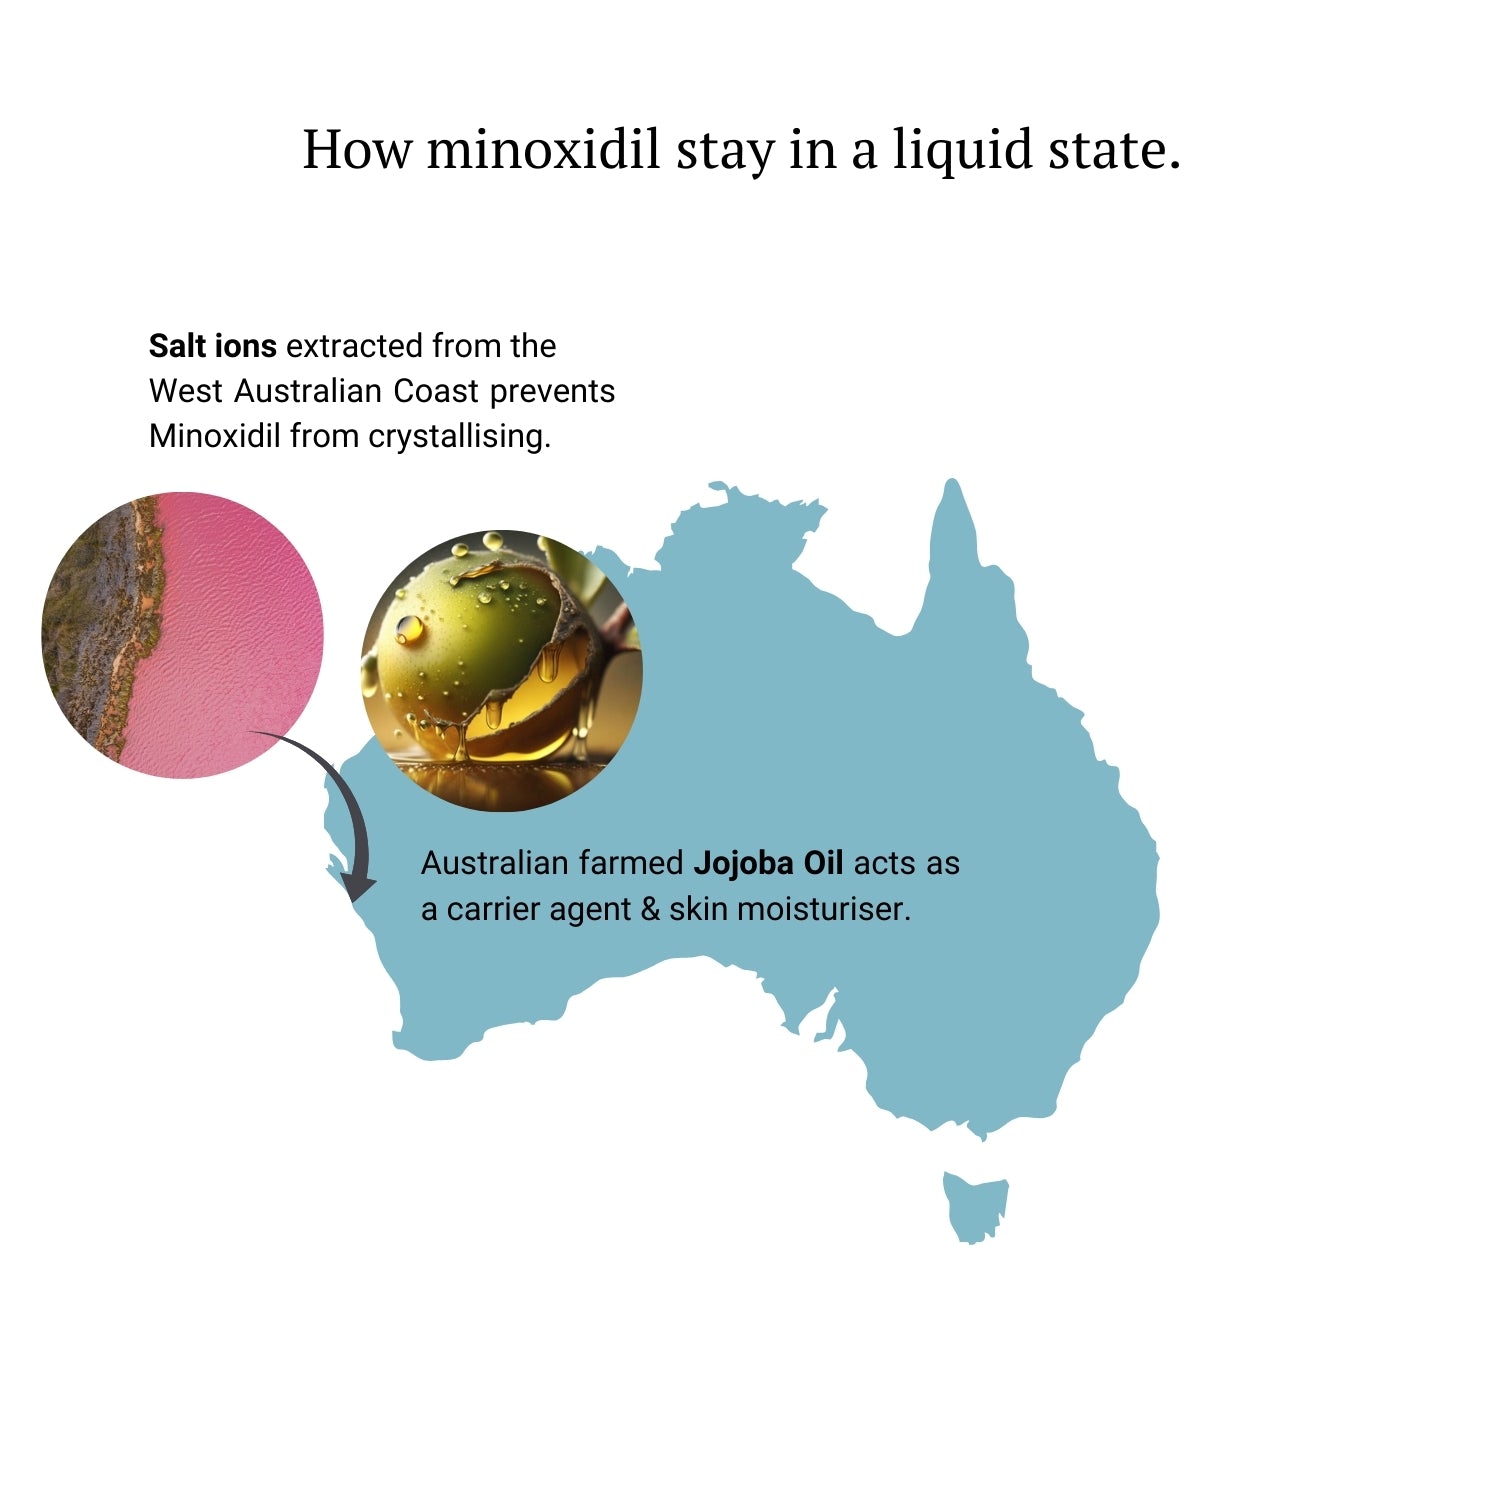 Minoxidil 5 Plus+ (alcohol-free)